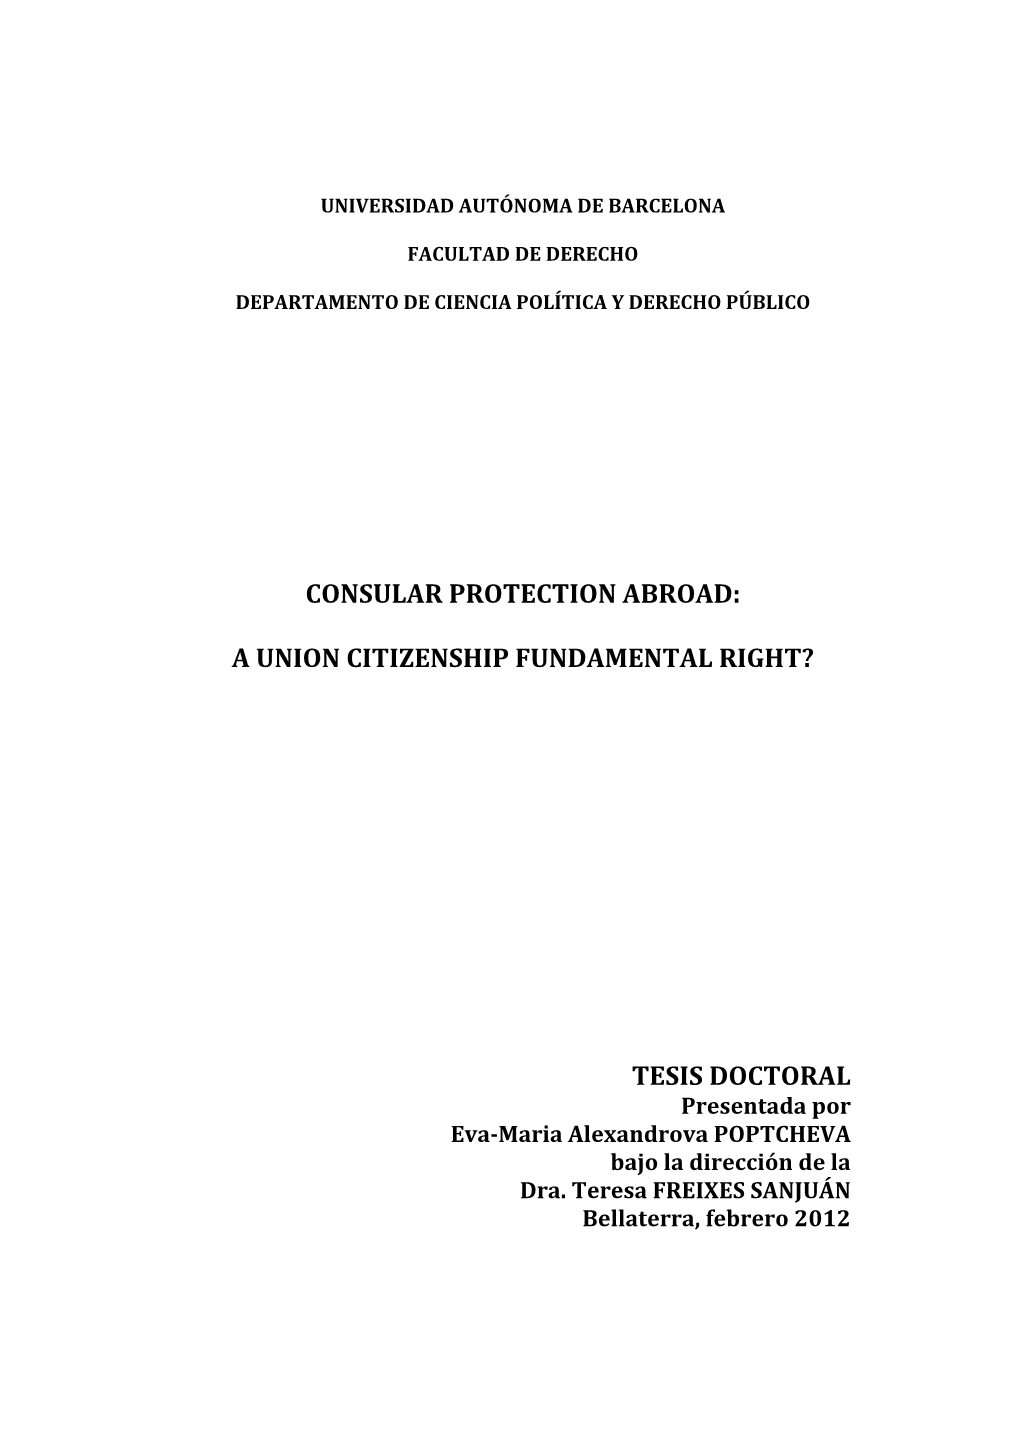 Consular Protection Abroad: a Union Citizenship Fundamental Right?